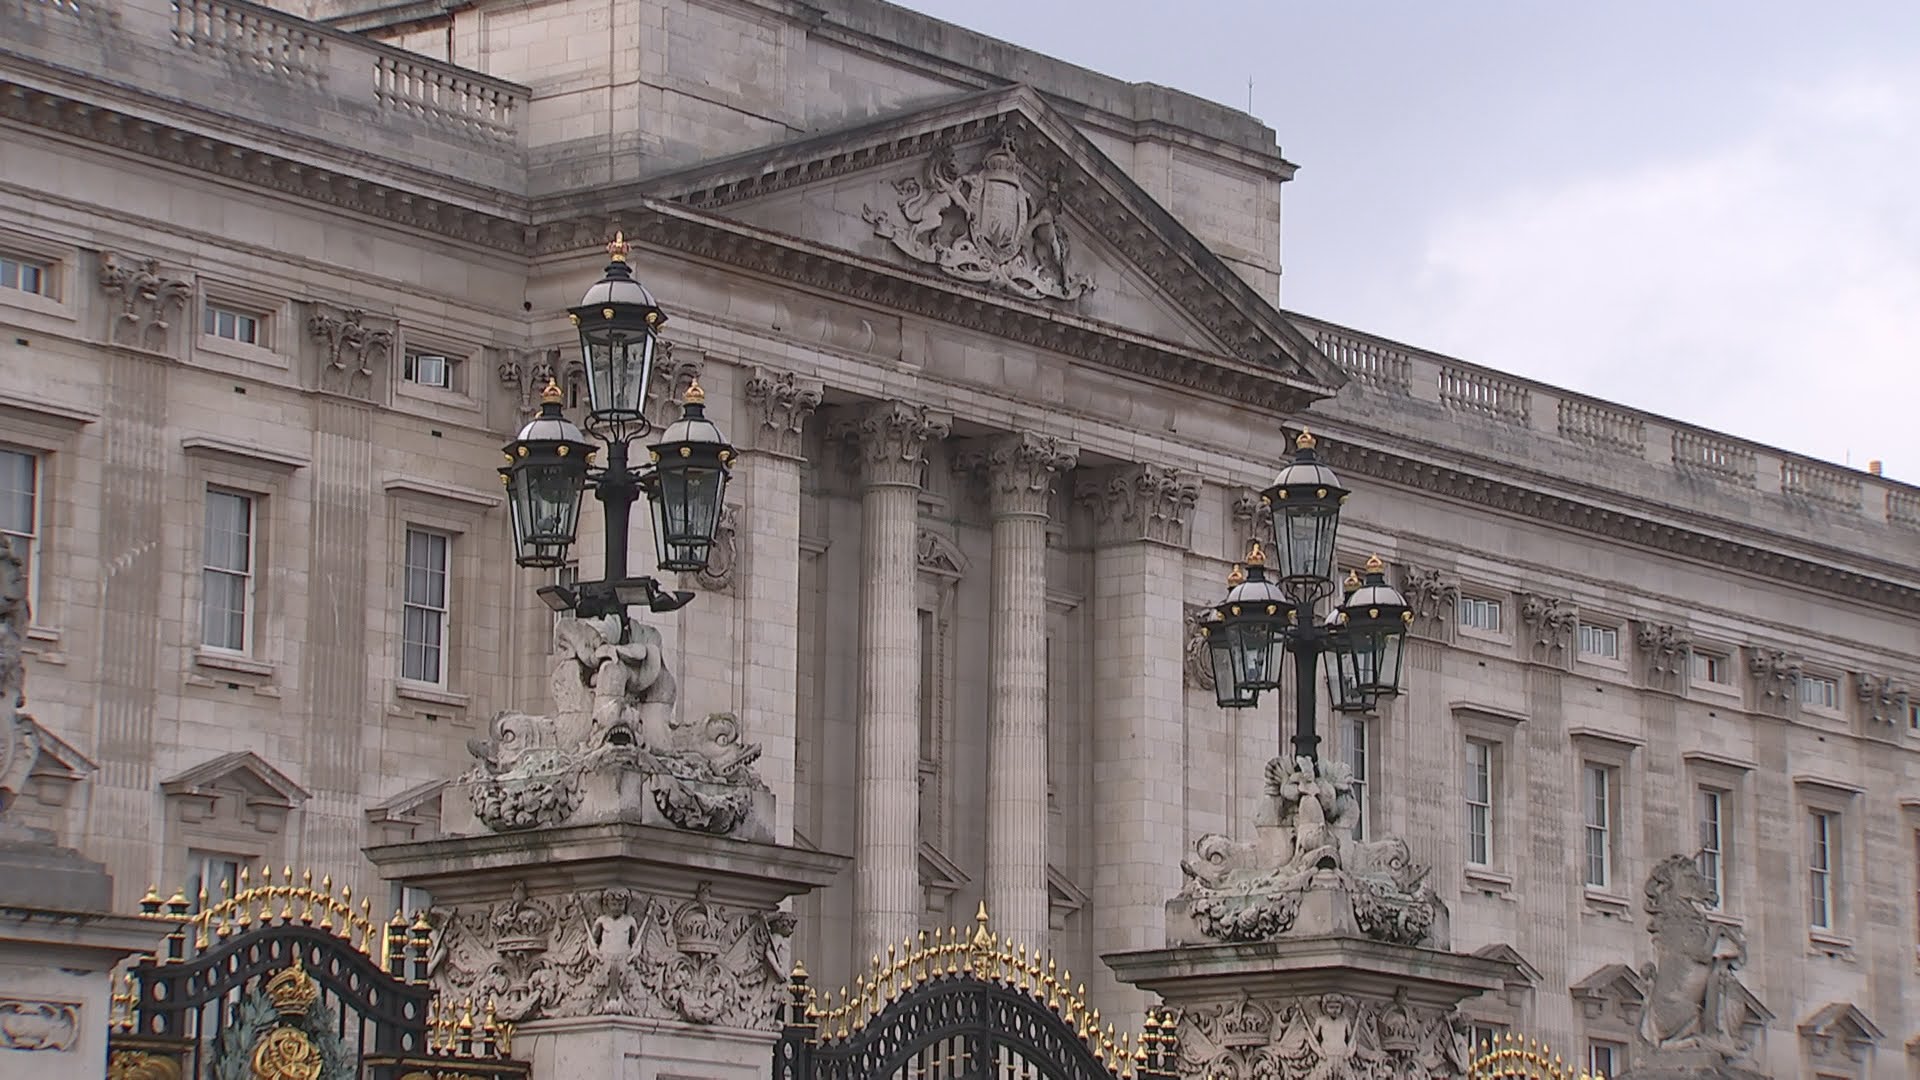 VIDEO: Buckinghamsku palaču očekuje obnova